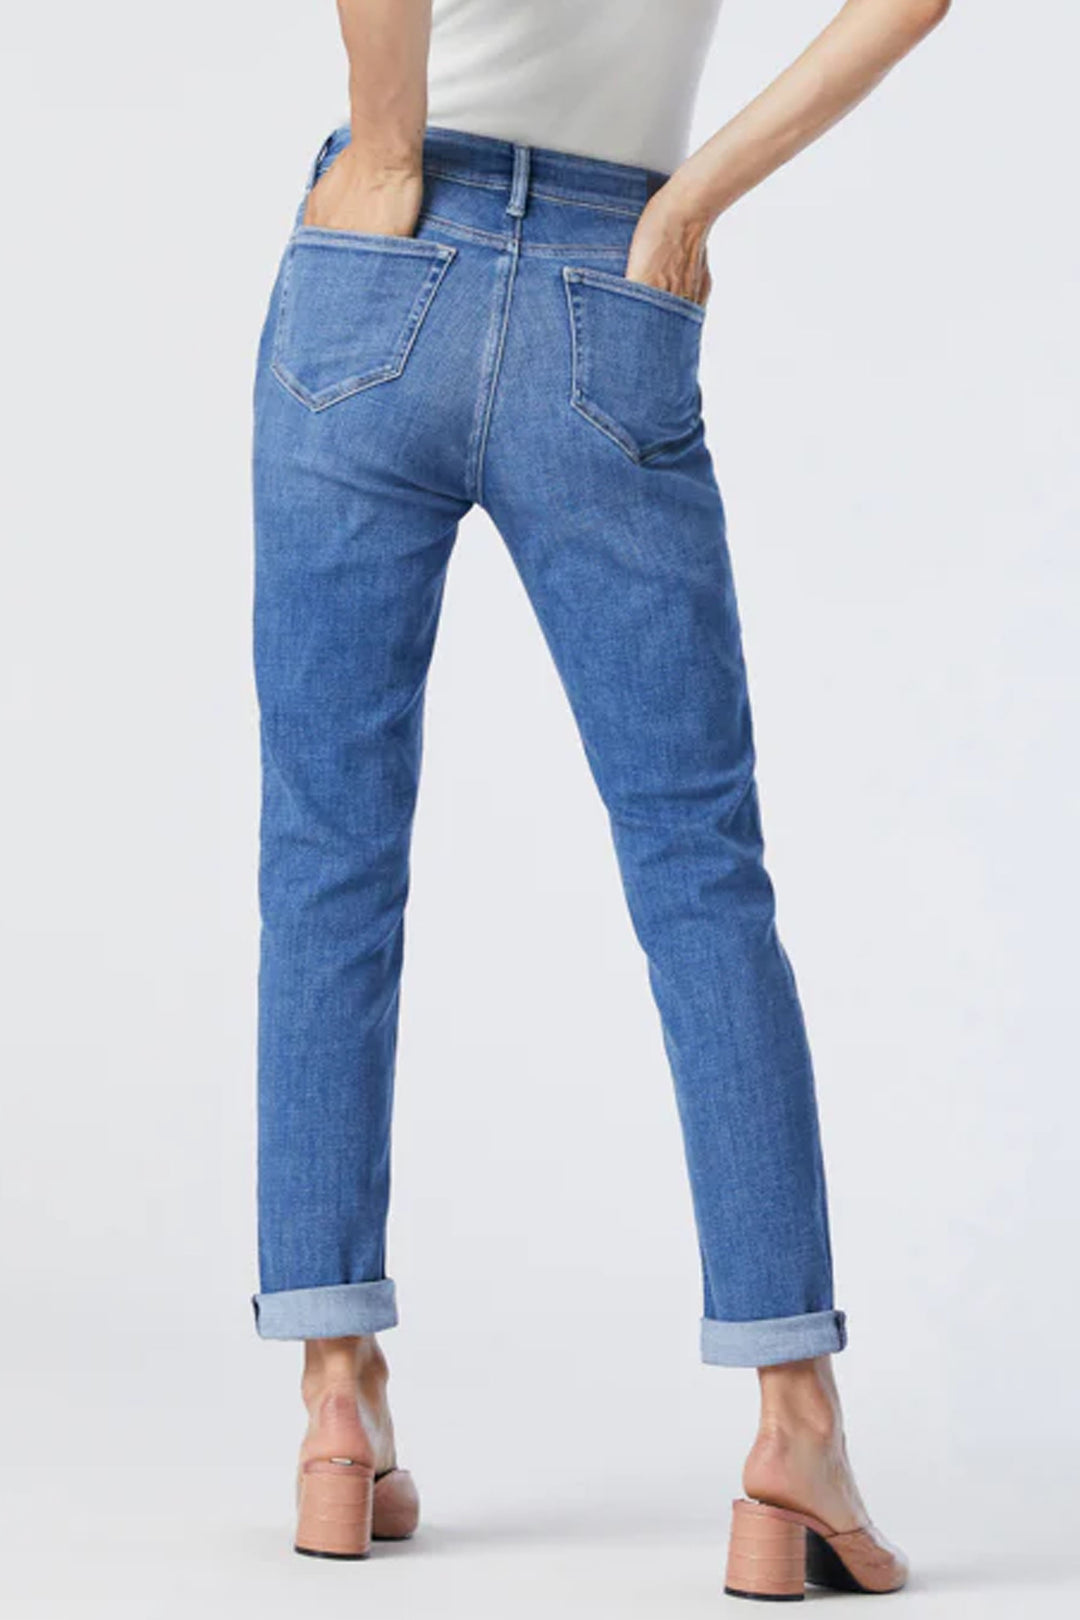 Mavi Jeans Spring 2023 women's casual mid wash slim straight leg high-rise cropped boyfriend jeans - back